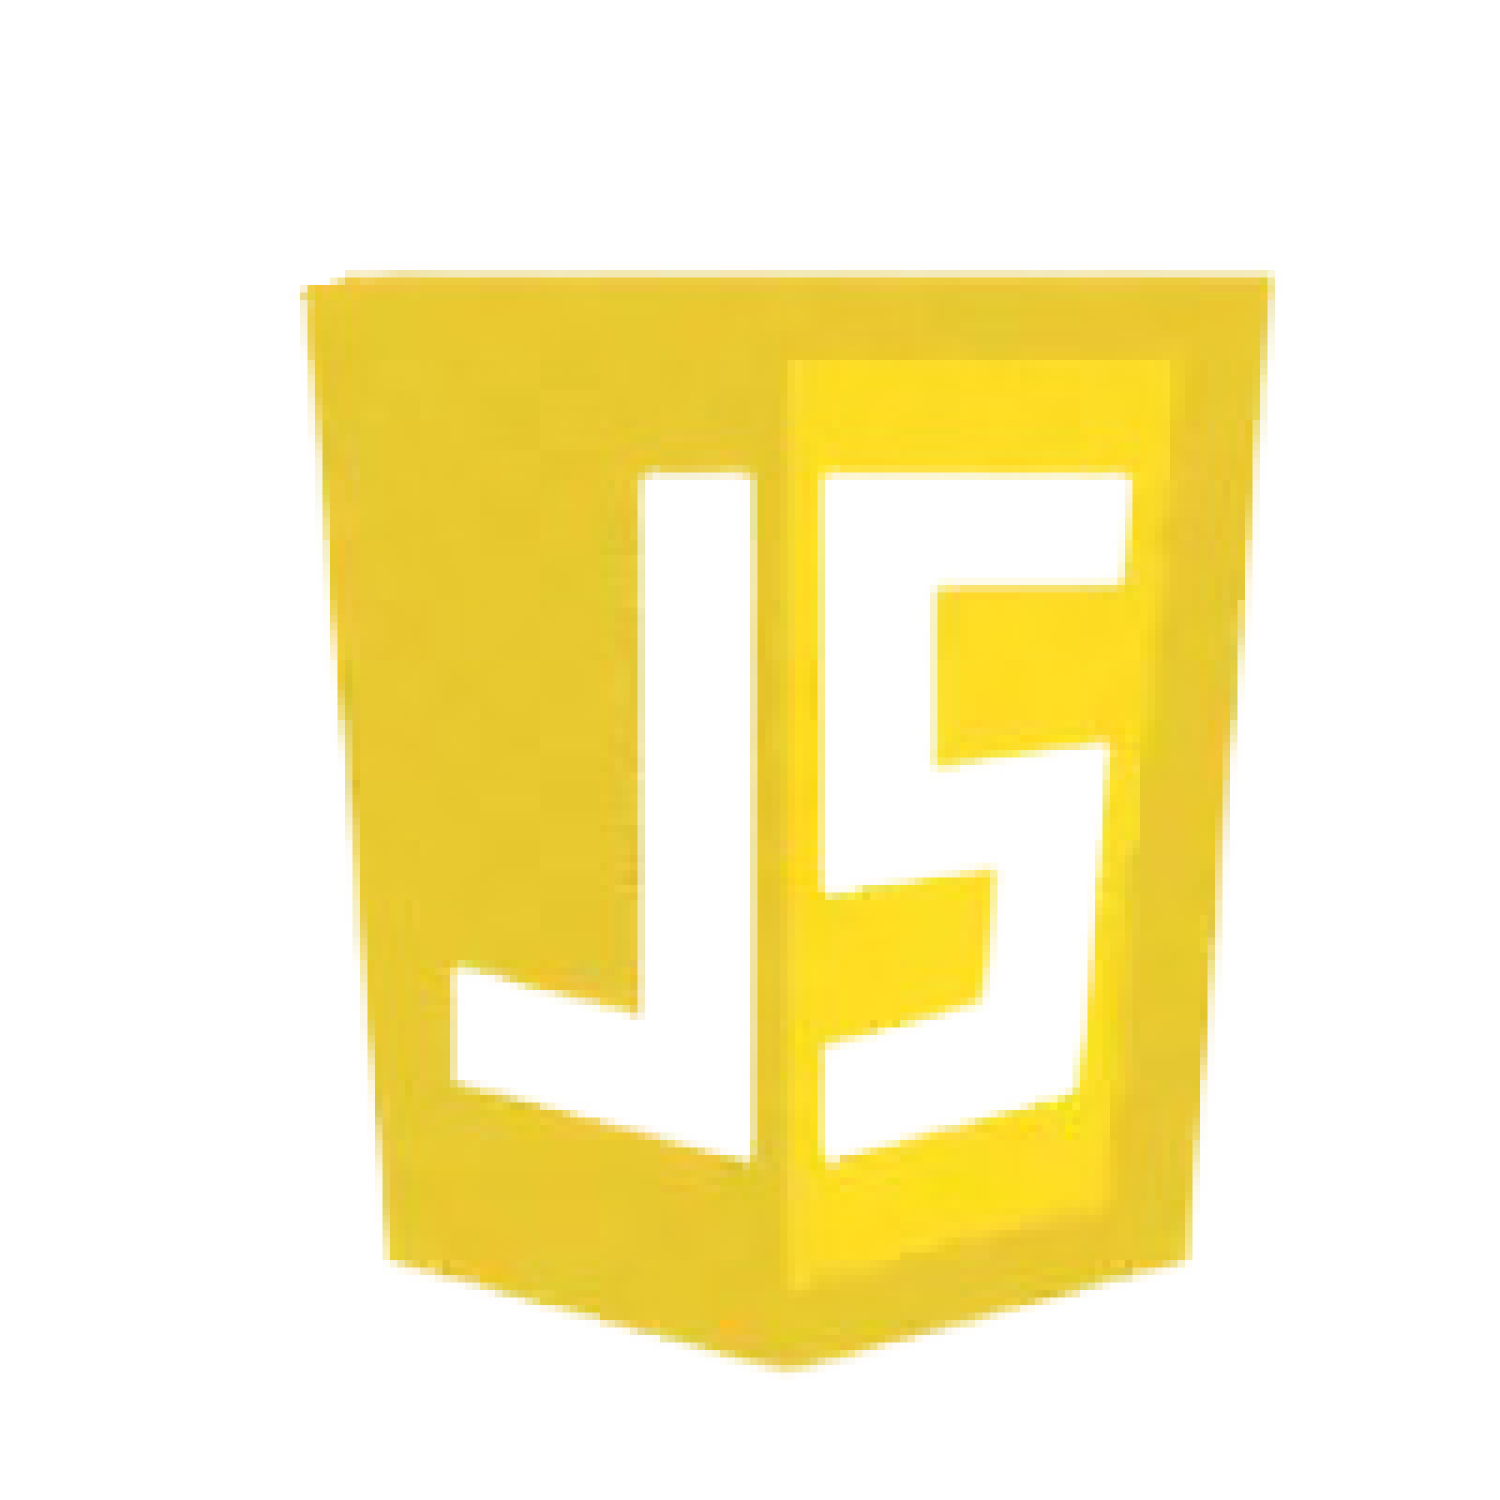 download Javascript logo for free